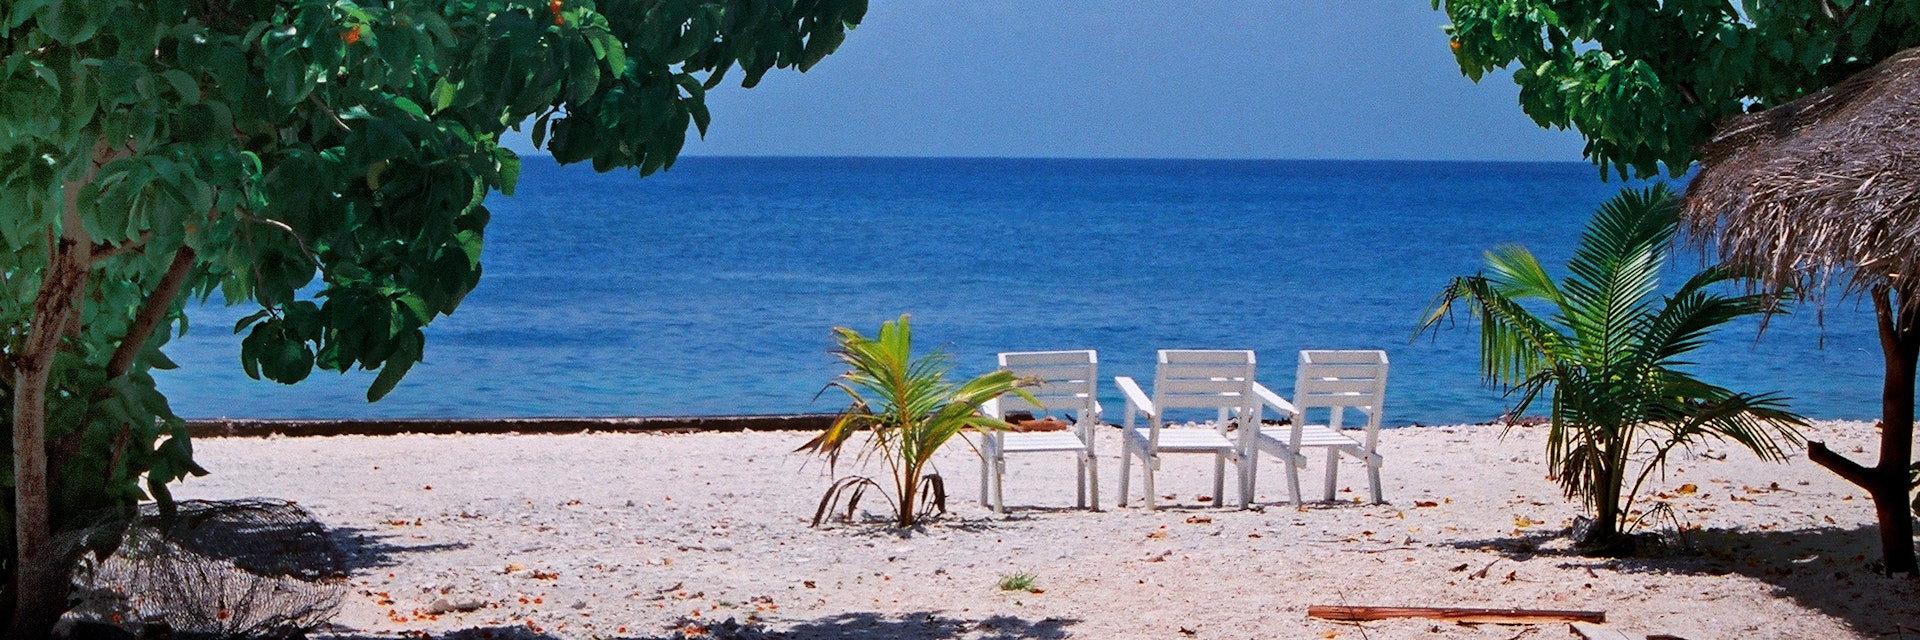 Dans le village de Tiputa sur l'atoll de Rangiroa aux Tuamotu, Polyn?sie Fran?aise.Scan d'un n?gatif.